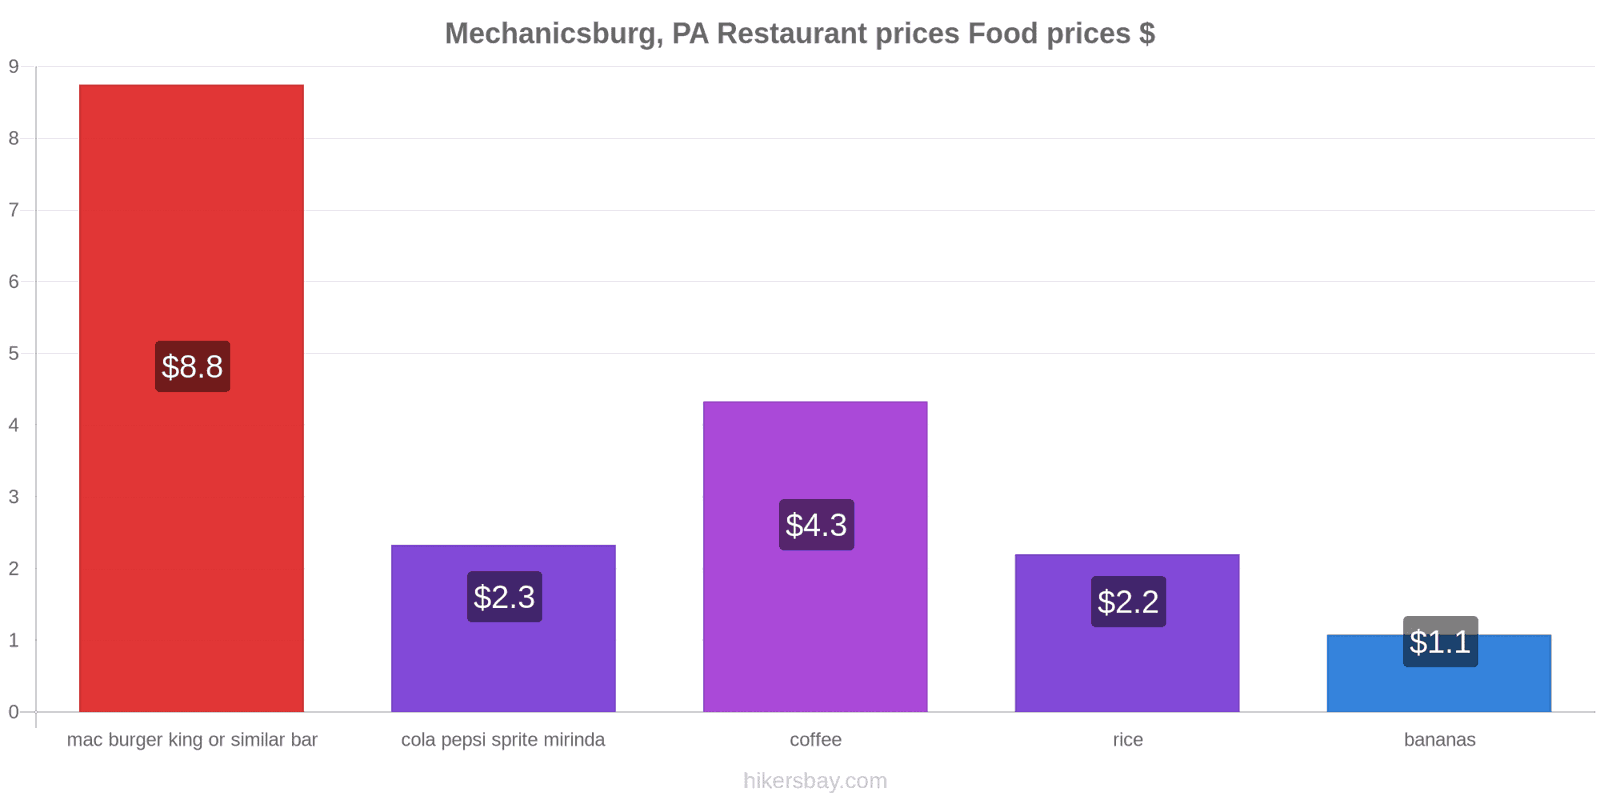 Mechanicsburg, PA price changes hikersbay.com